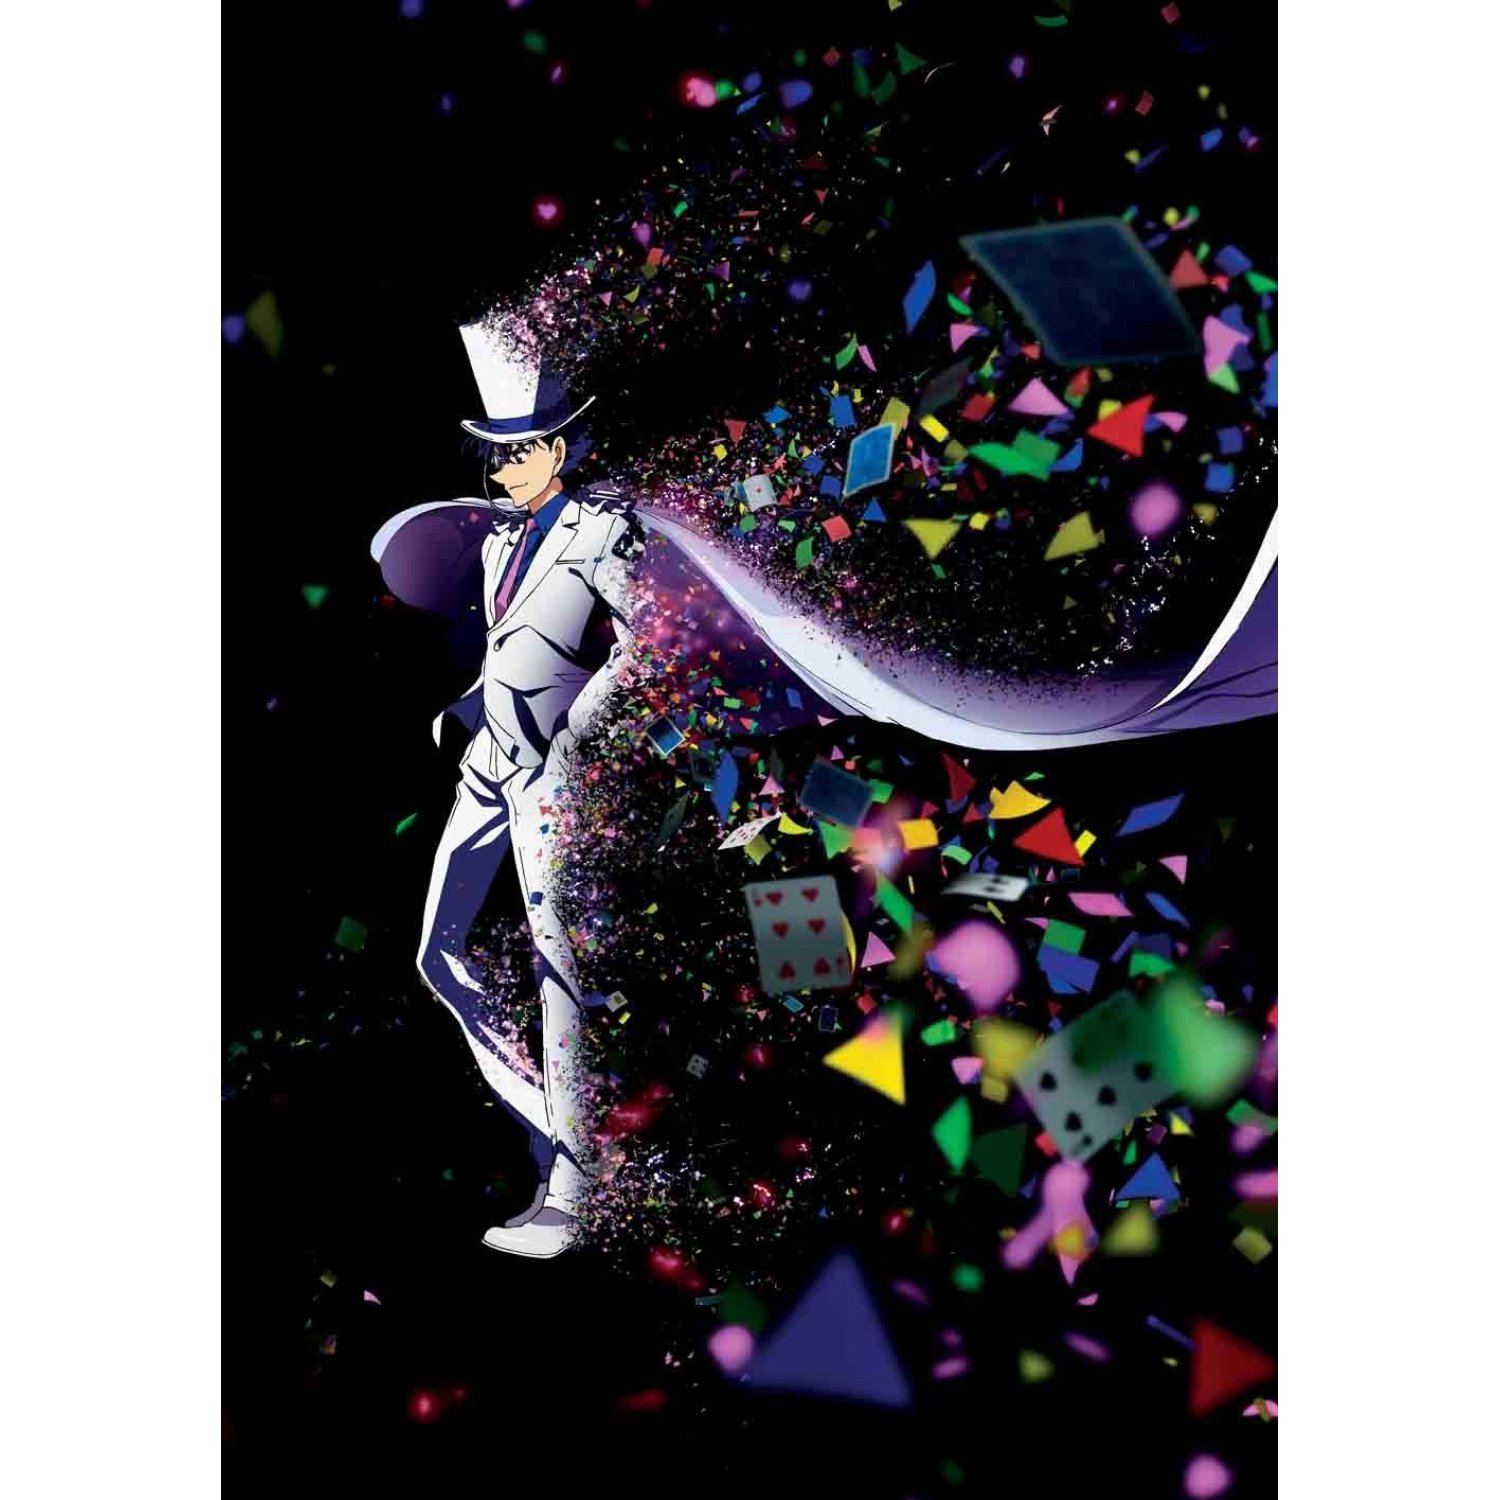 Magic Kaito 1412 HD wallpapers, Desktop wallpaper - most viewed